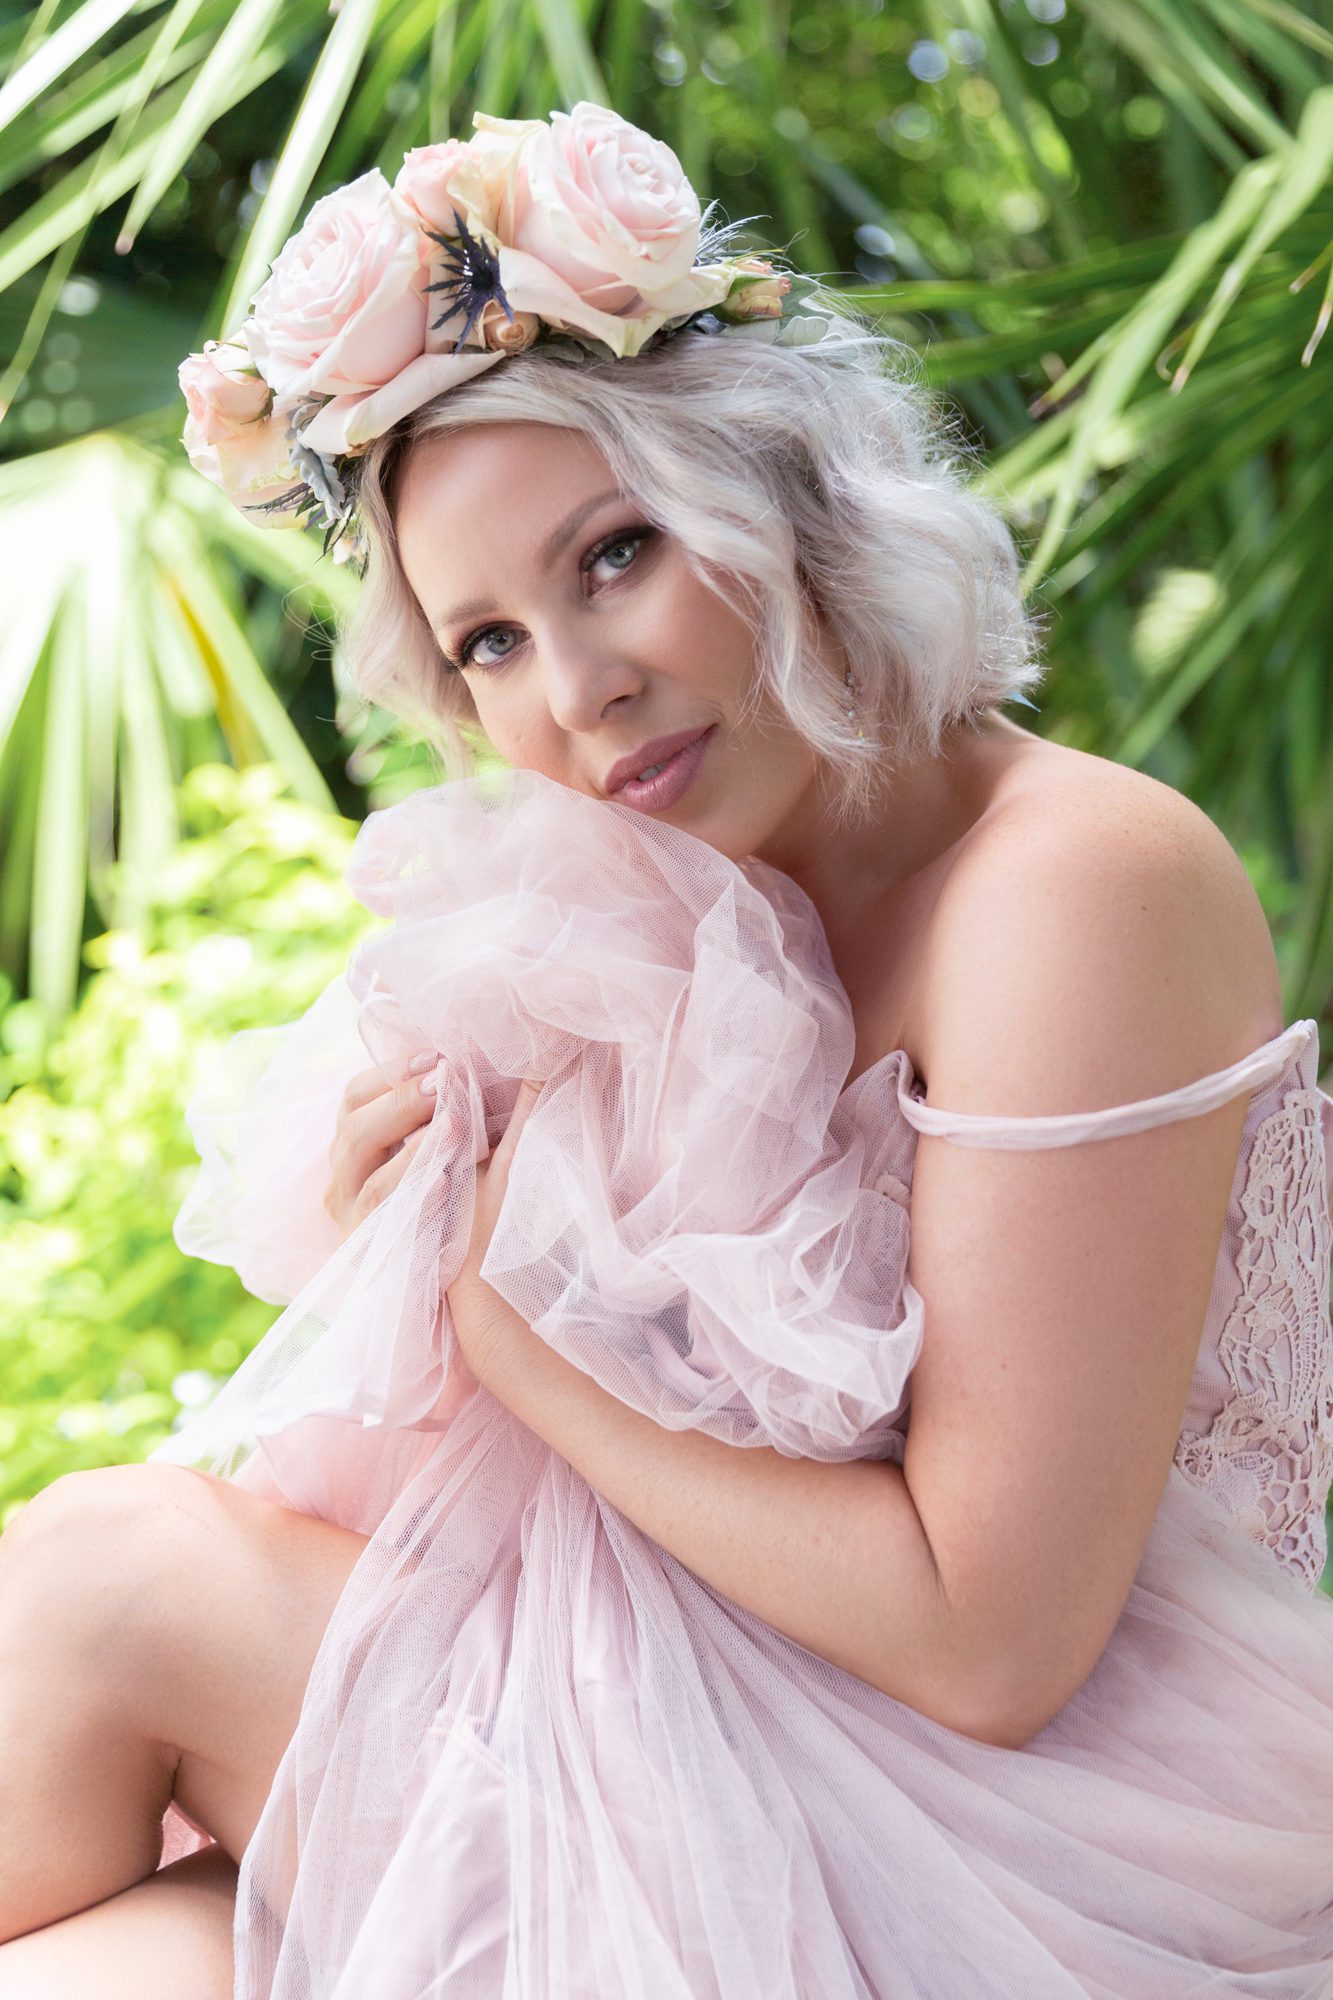 Breast cancer survivor photoshoot 6 year cancerversary AnnaCrollman_07